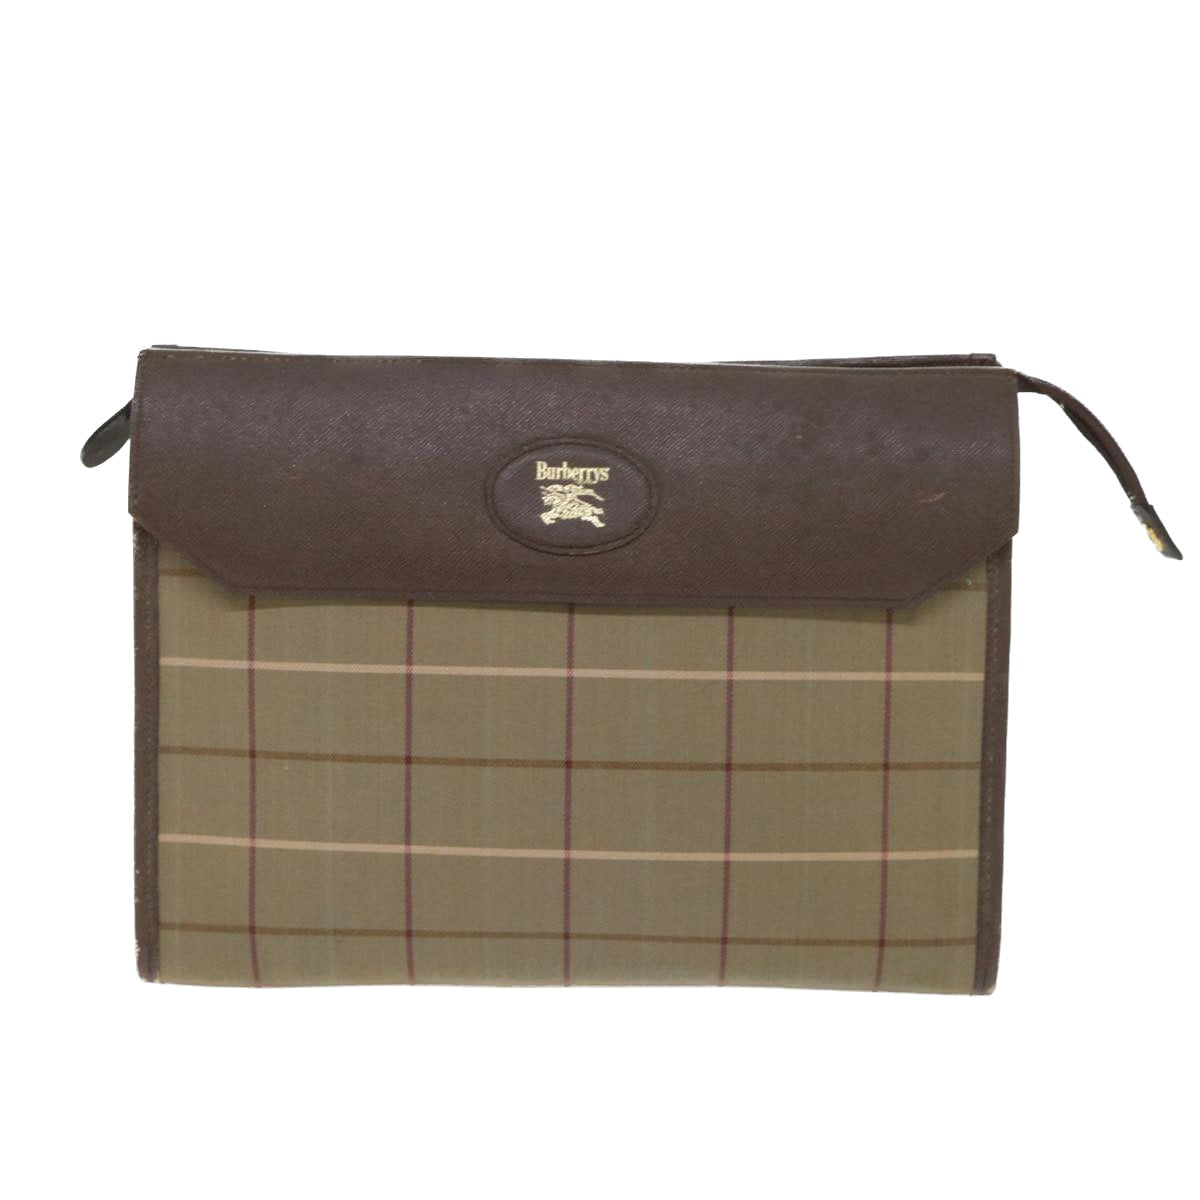 Burberrys Nova Check Clutch Bag Canvas Leather 2Set Beige Brown Auth bs8236 - 0